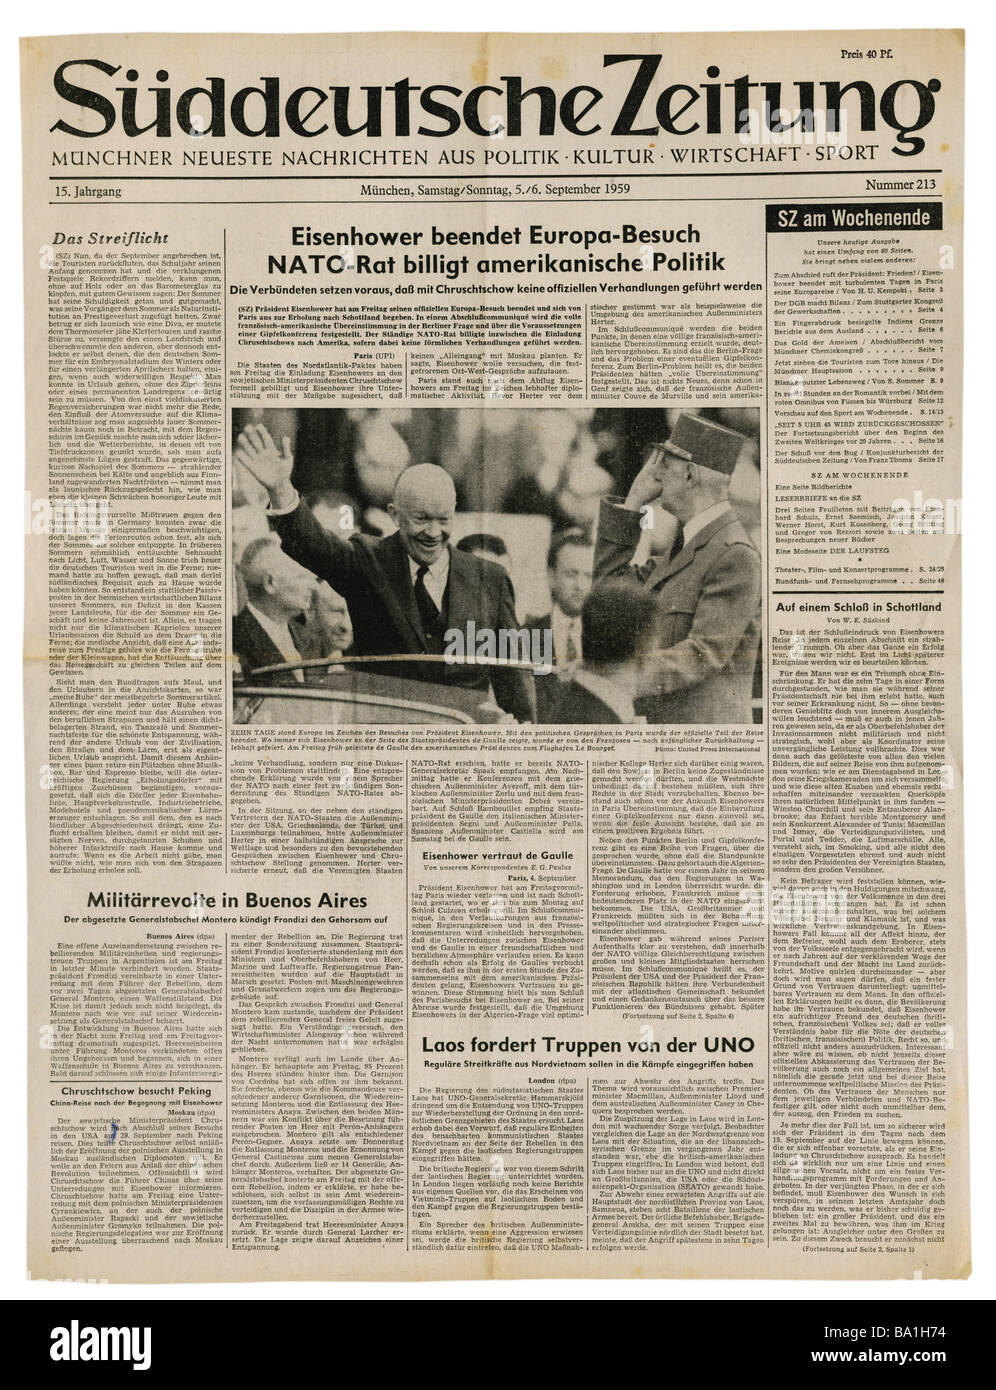 press/media, magazines, 'Süddeutsche Zeitung', Munich, 15 volume, number 213, Saturday / Sunday 5. / 6.9.1959, title, Eisenhower finishing visit to Europe - NATO council sanctioning American policy, Stock Photo